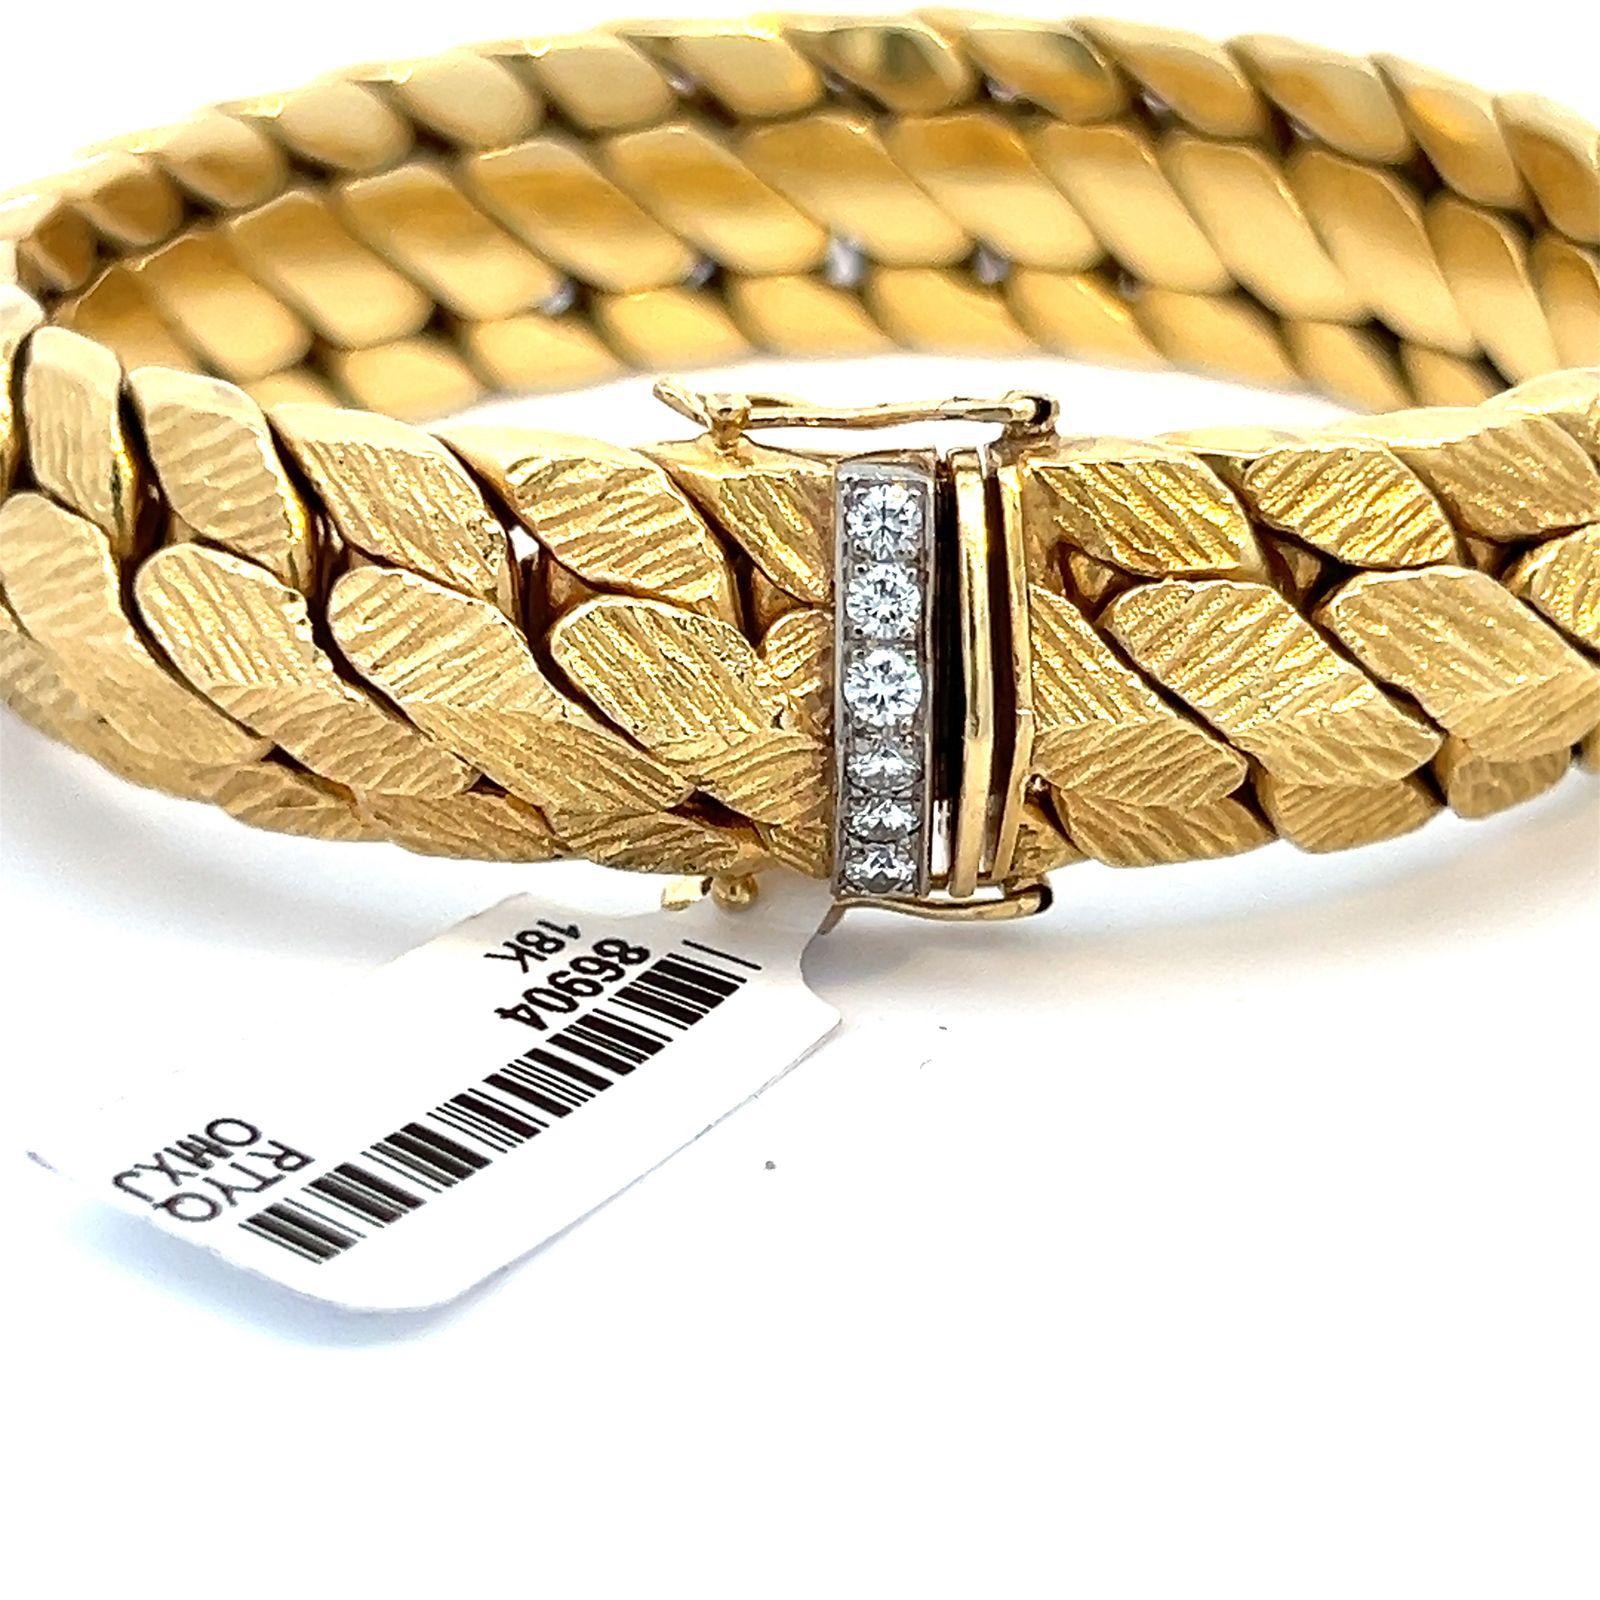 Retro 18 karat Yellow Gold Woven Florentine chain-link bracelet with diamond clasp. The bracelet is 18 karat solid yellow gold weighing 88.1 grams. The white gold clasp has six bezel set diamonds totaling 0.25 carats .The bracelet is 0.25 inches